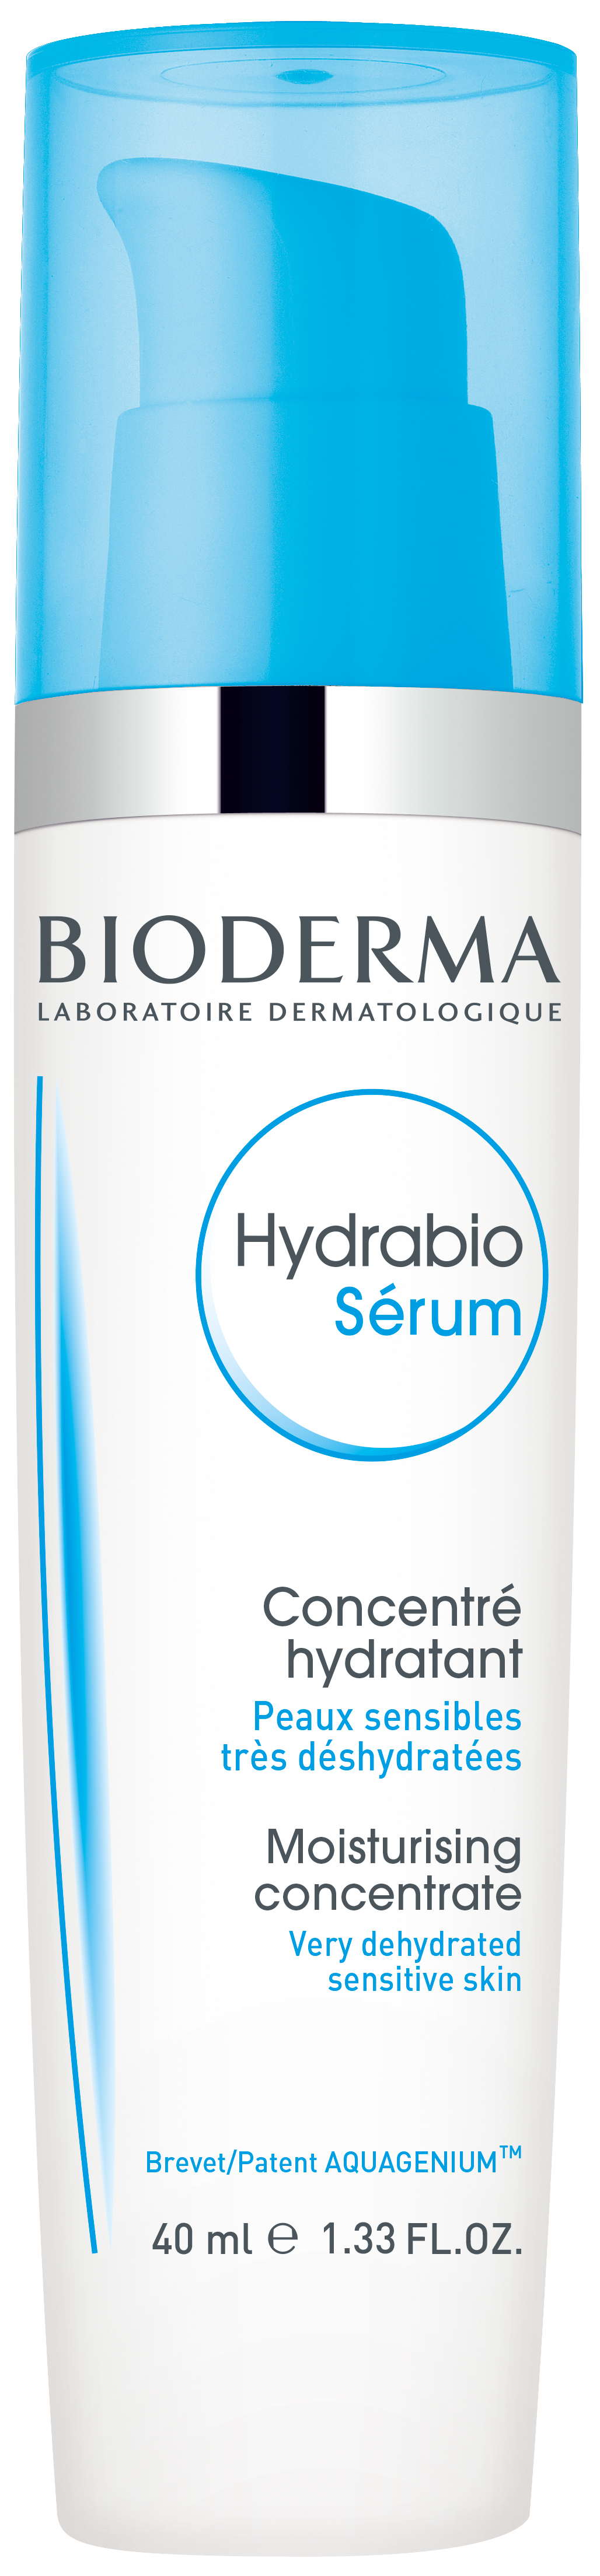 Bioderma Hydrabio Serum Concentrate for Dehydrated Sensitive Skin 40ml